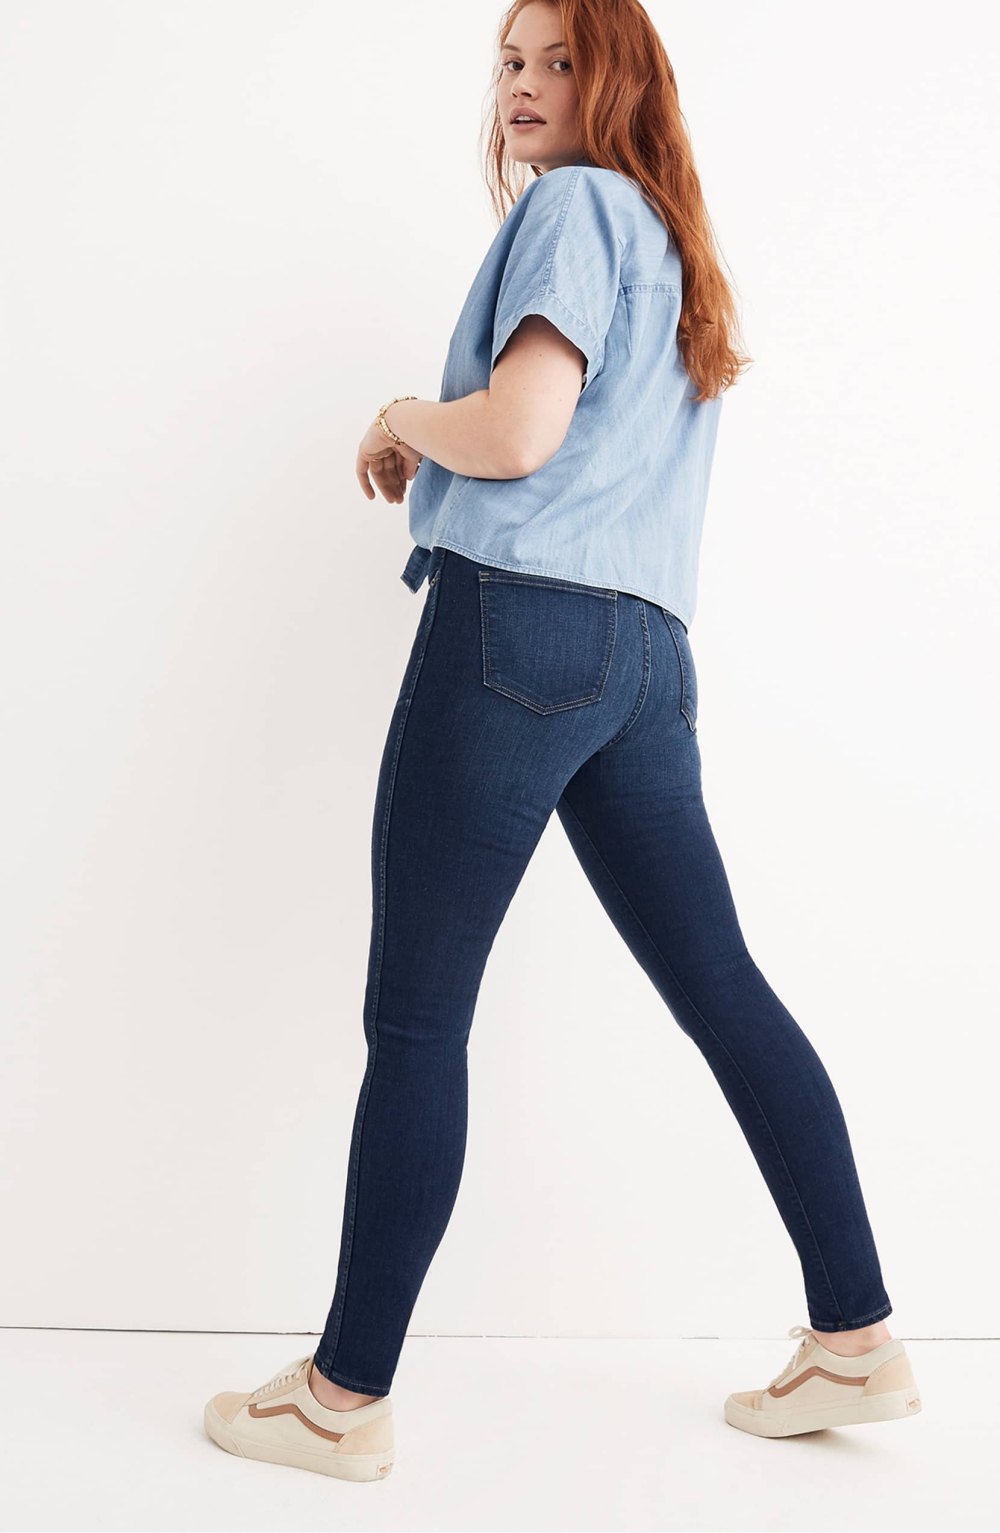 Madewell skinny jeans